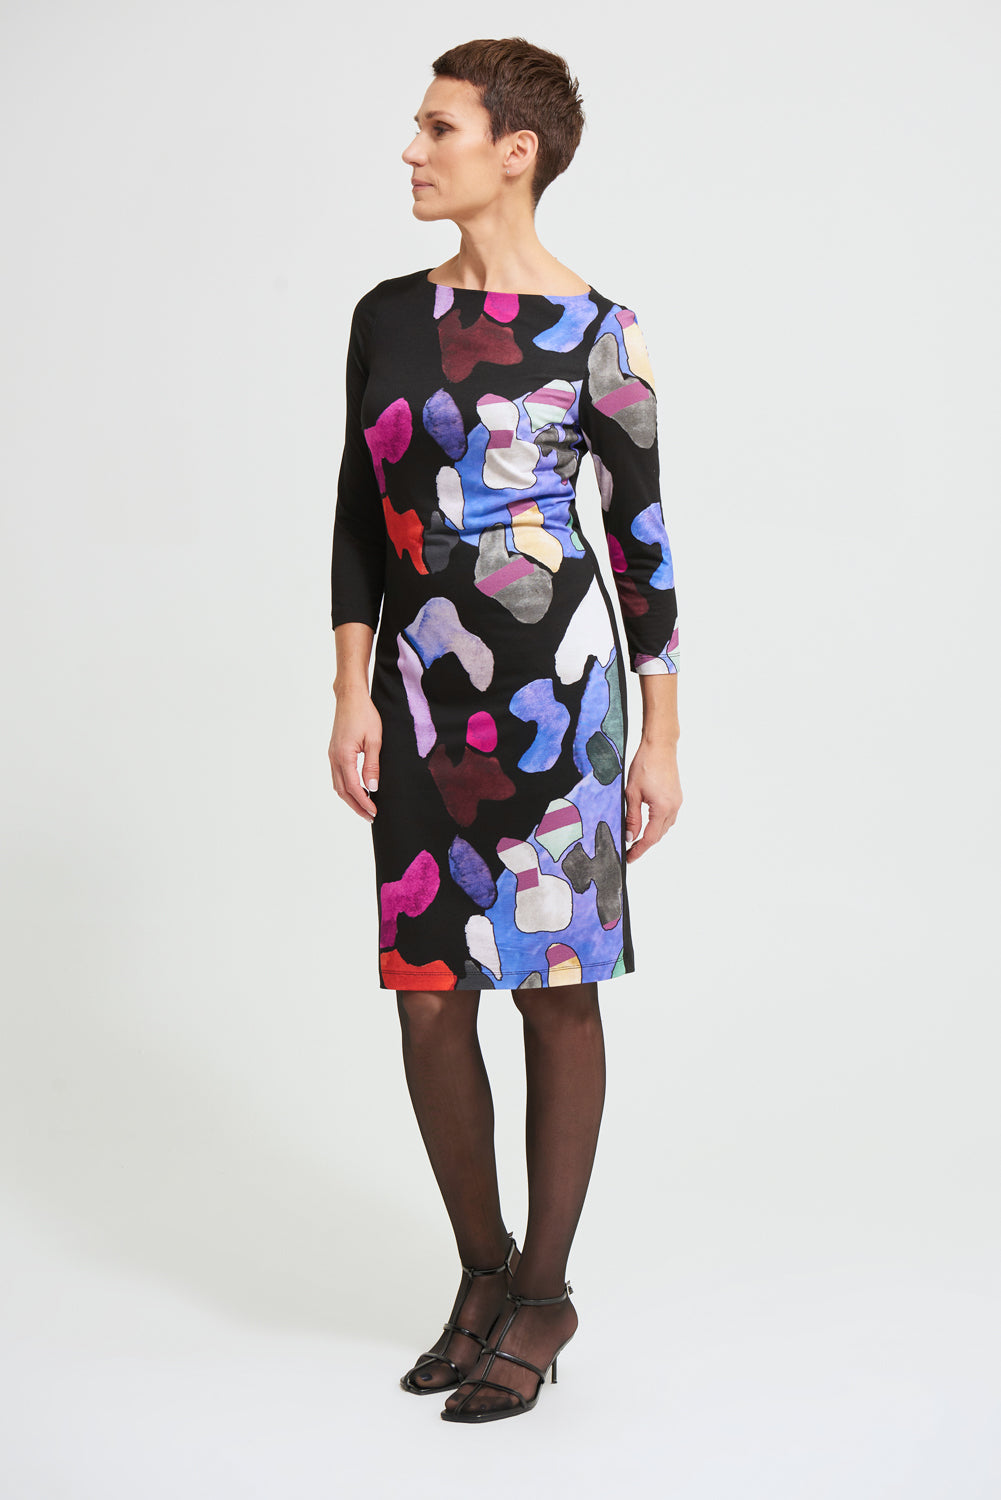 Joseph Ribkoff Black-Multi Abstract Dress Style 213687